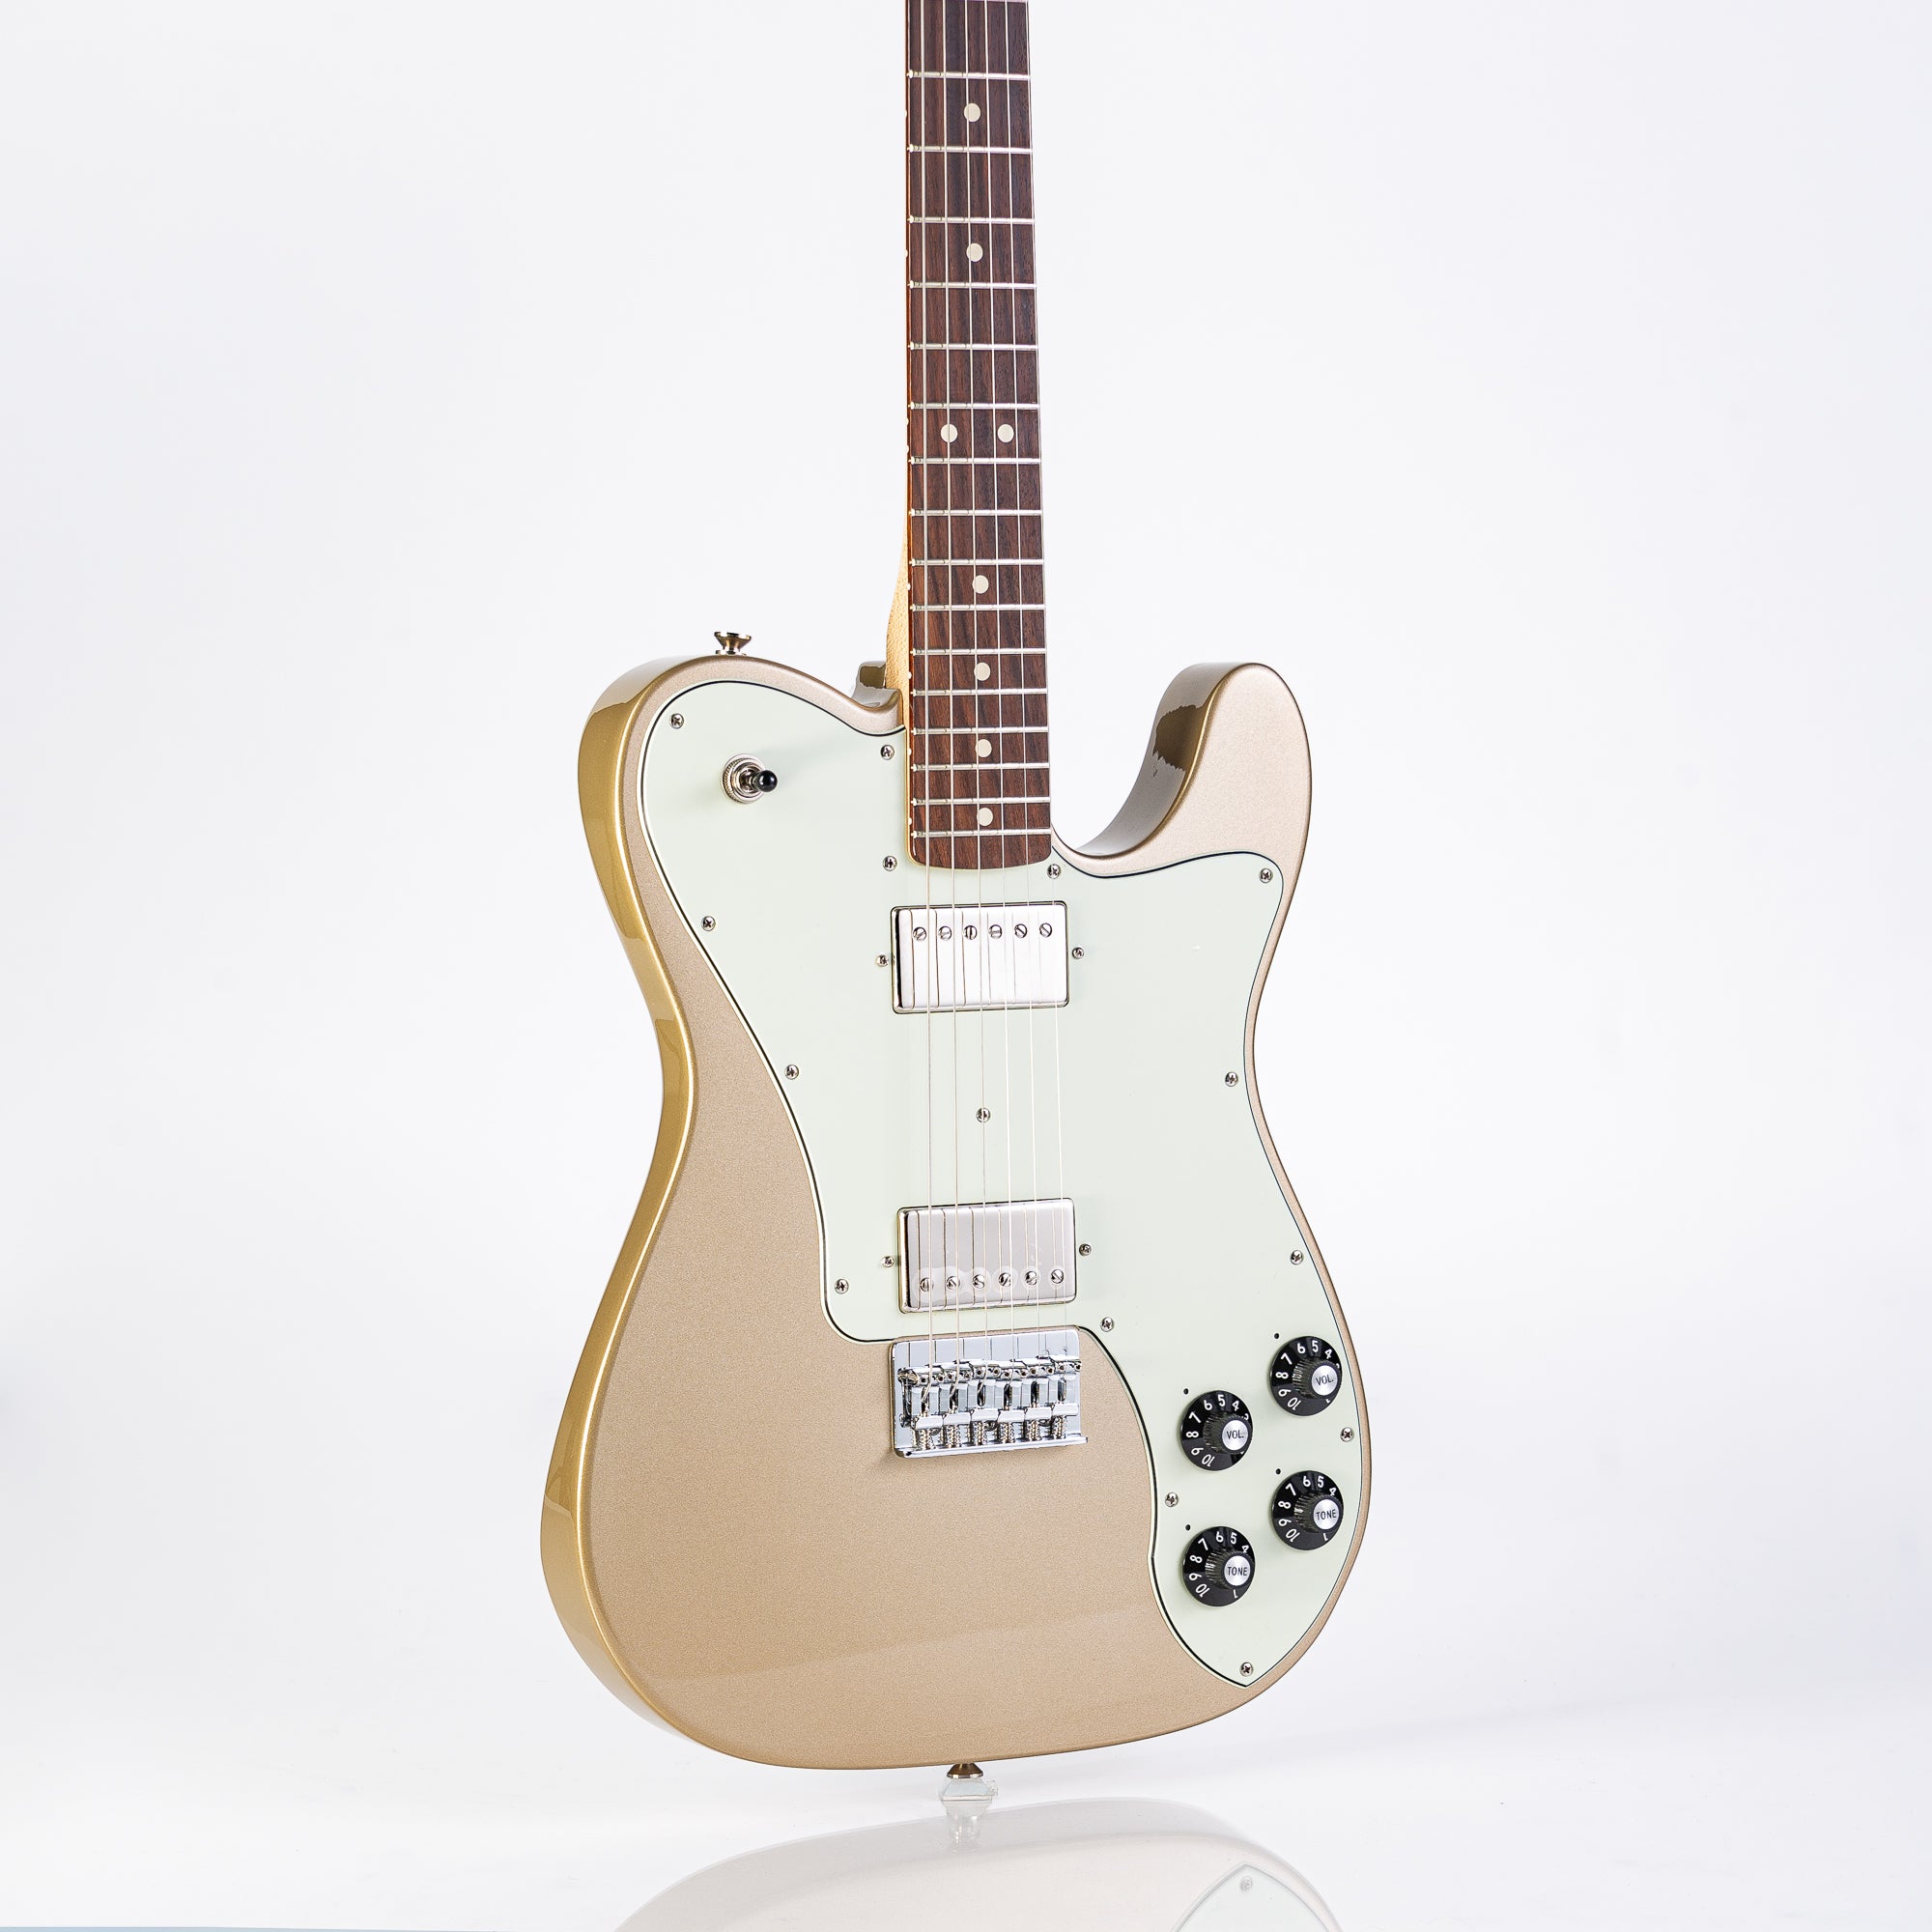 USED Fender Artist Series Chris Shiflett Telecaster Deluxe with Rosewood Fingerboard - Shoreline Gold